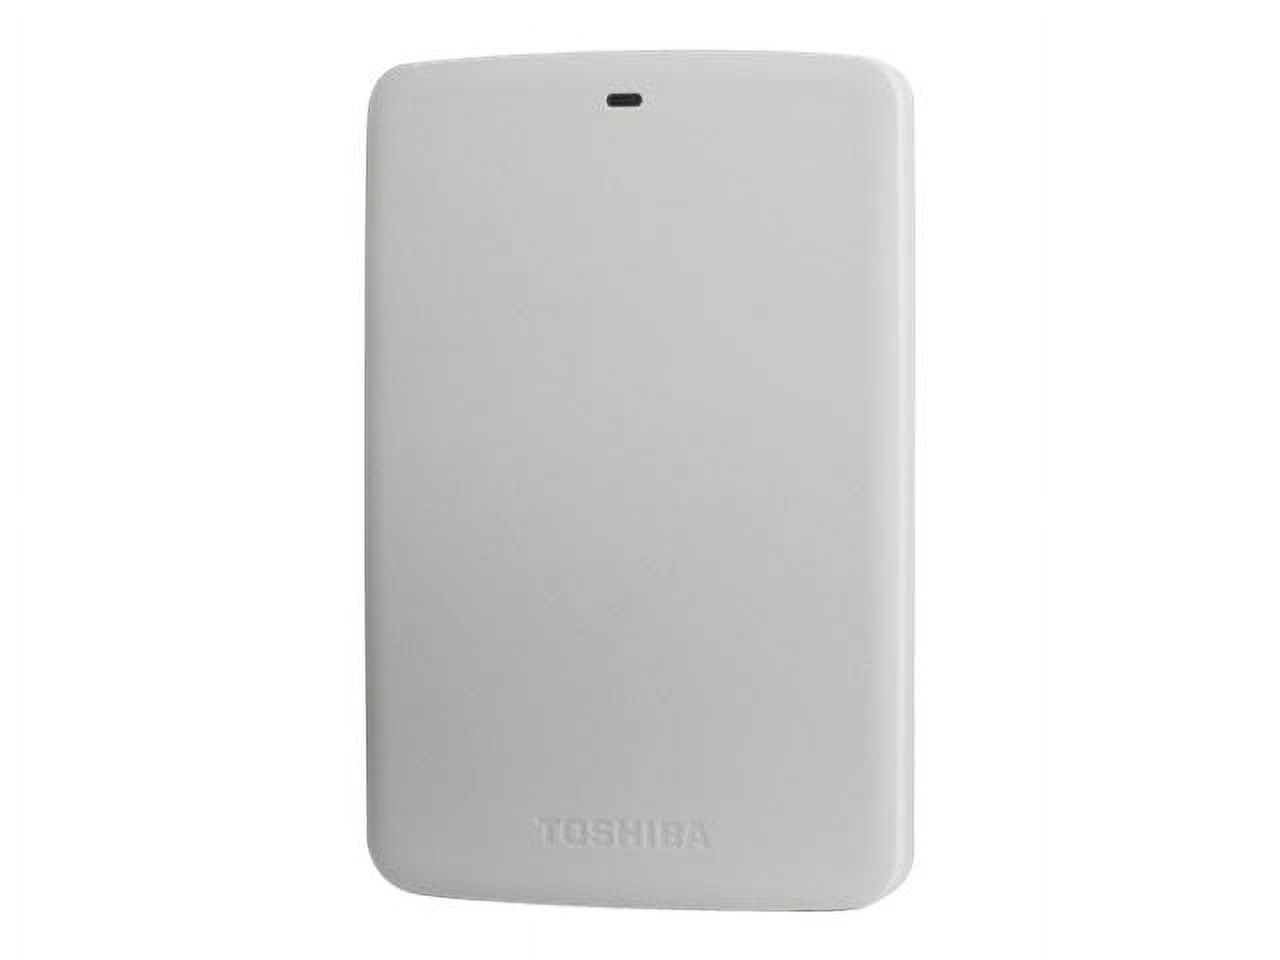 Toshiba Canvio Basics - Hard drive - 1 TB - external (portable) - USB 3.0 - 5400 rpm - buffer: 8 MB - white - image 1 of 3